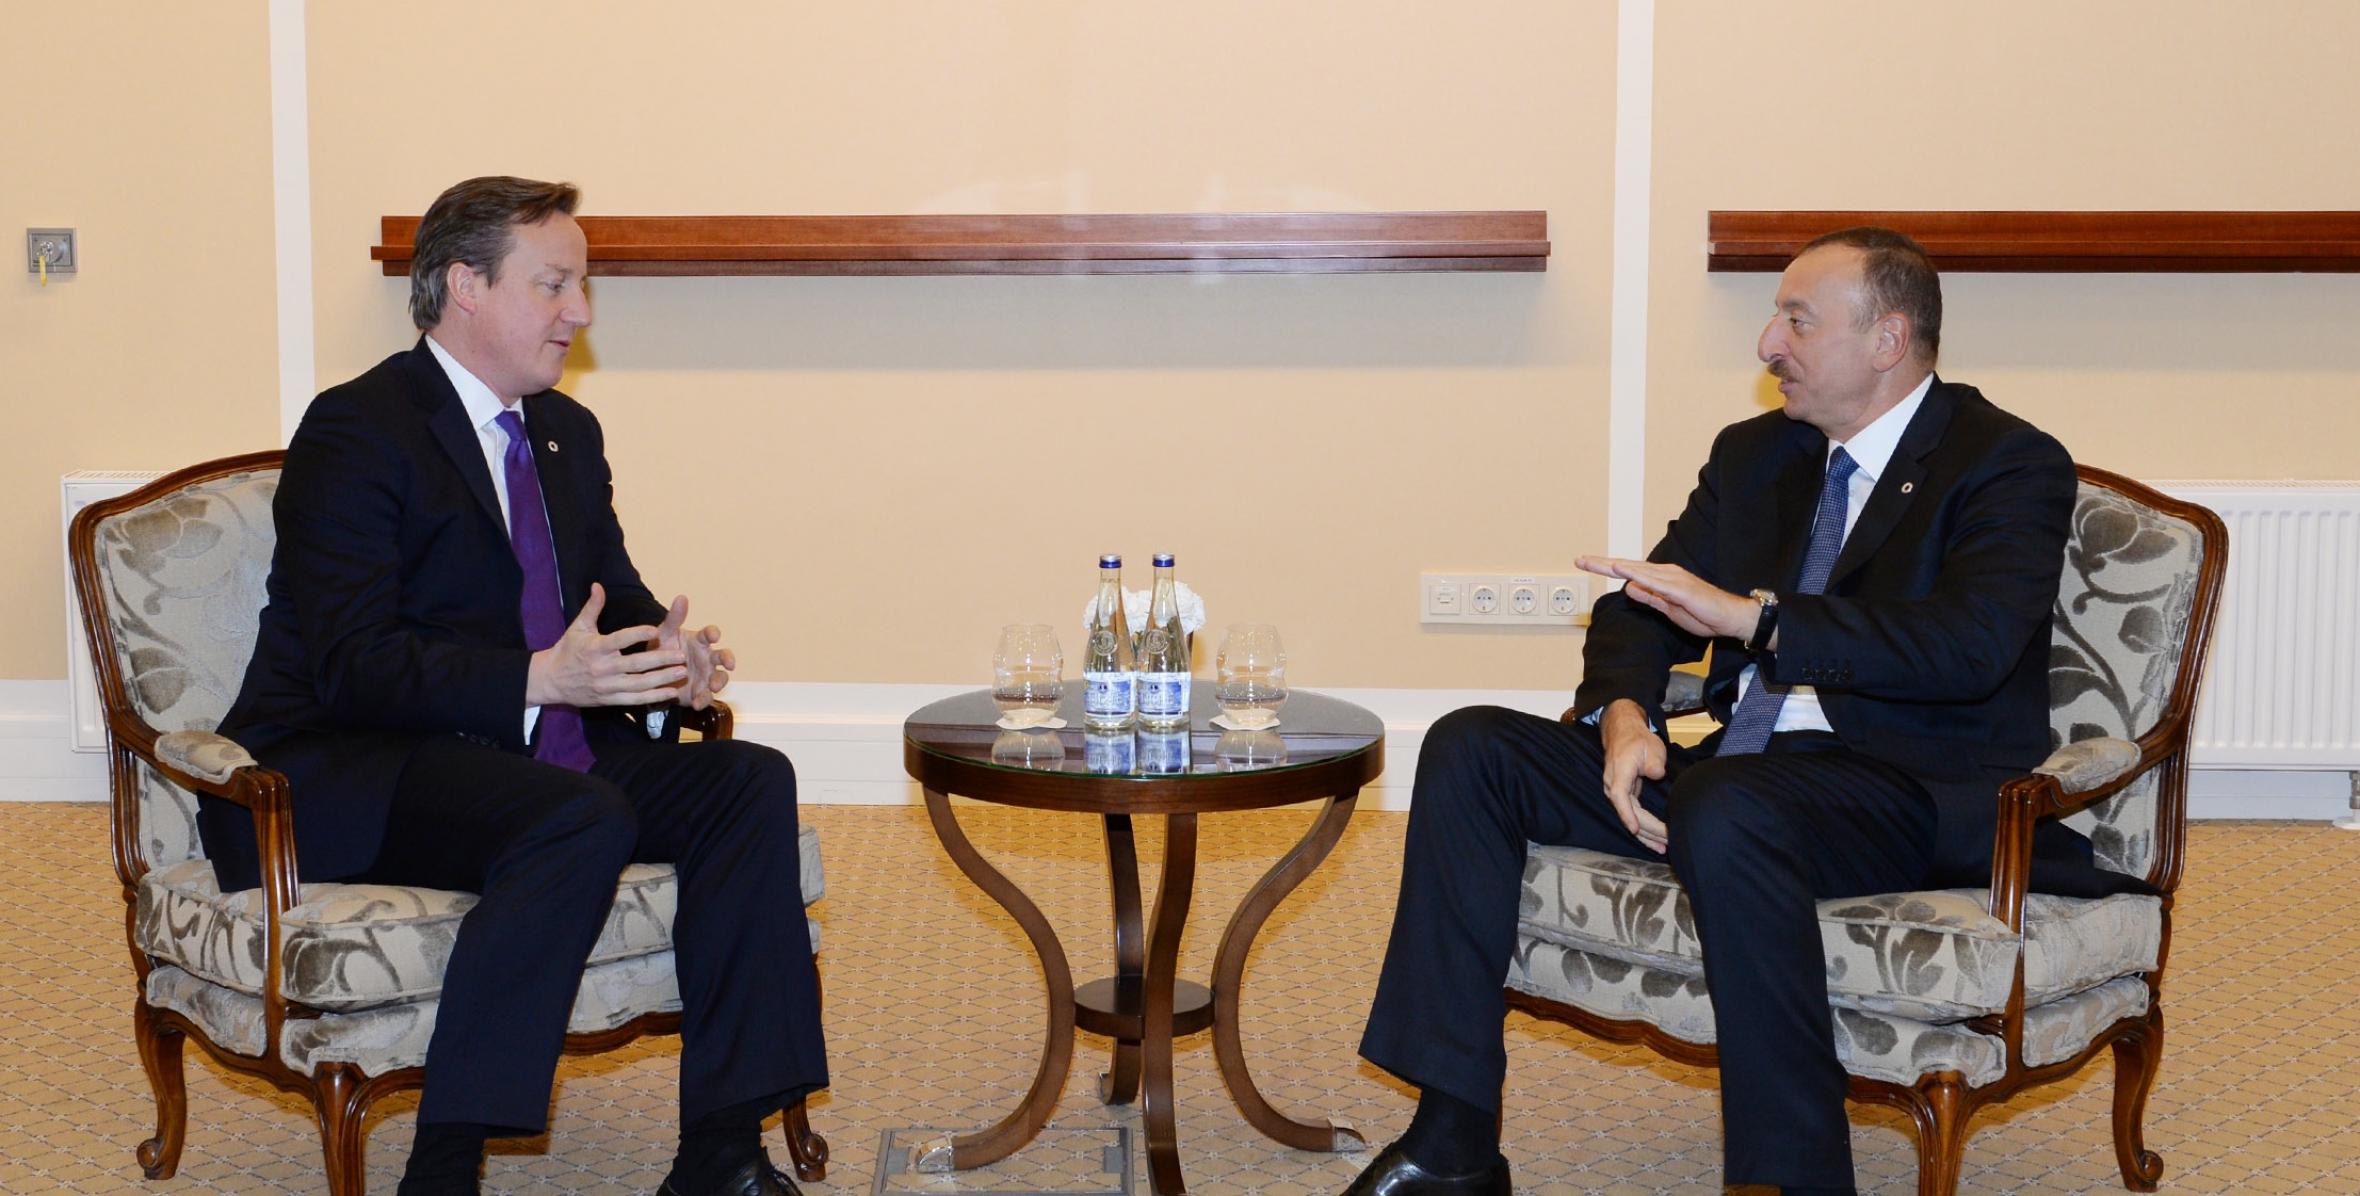 Ilham Aliyev had a meeting with British Prime Minister David Cameron